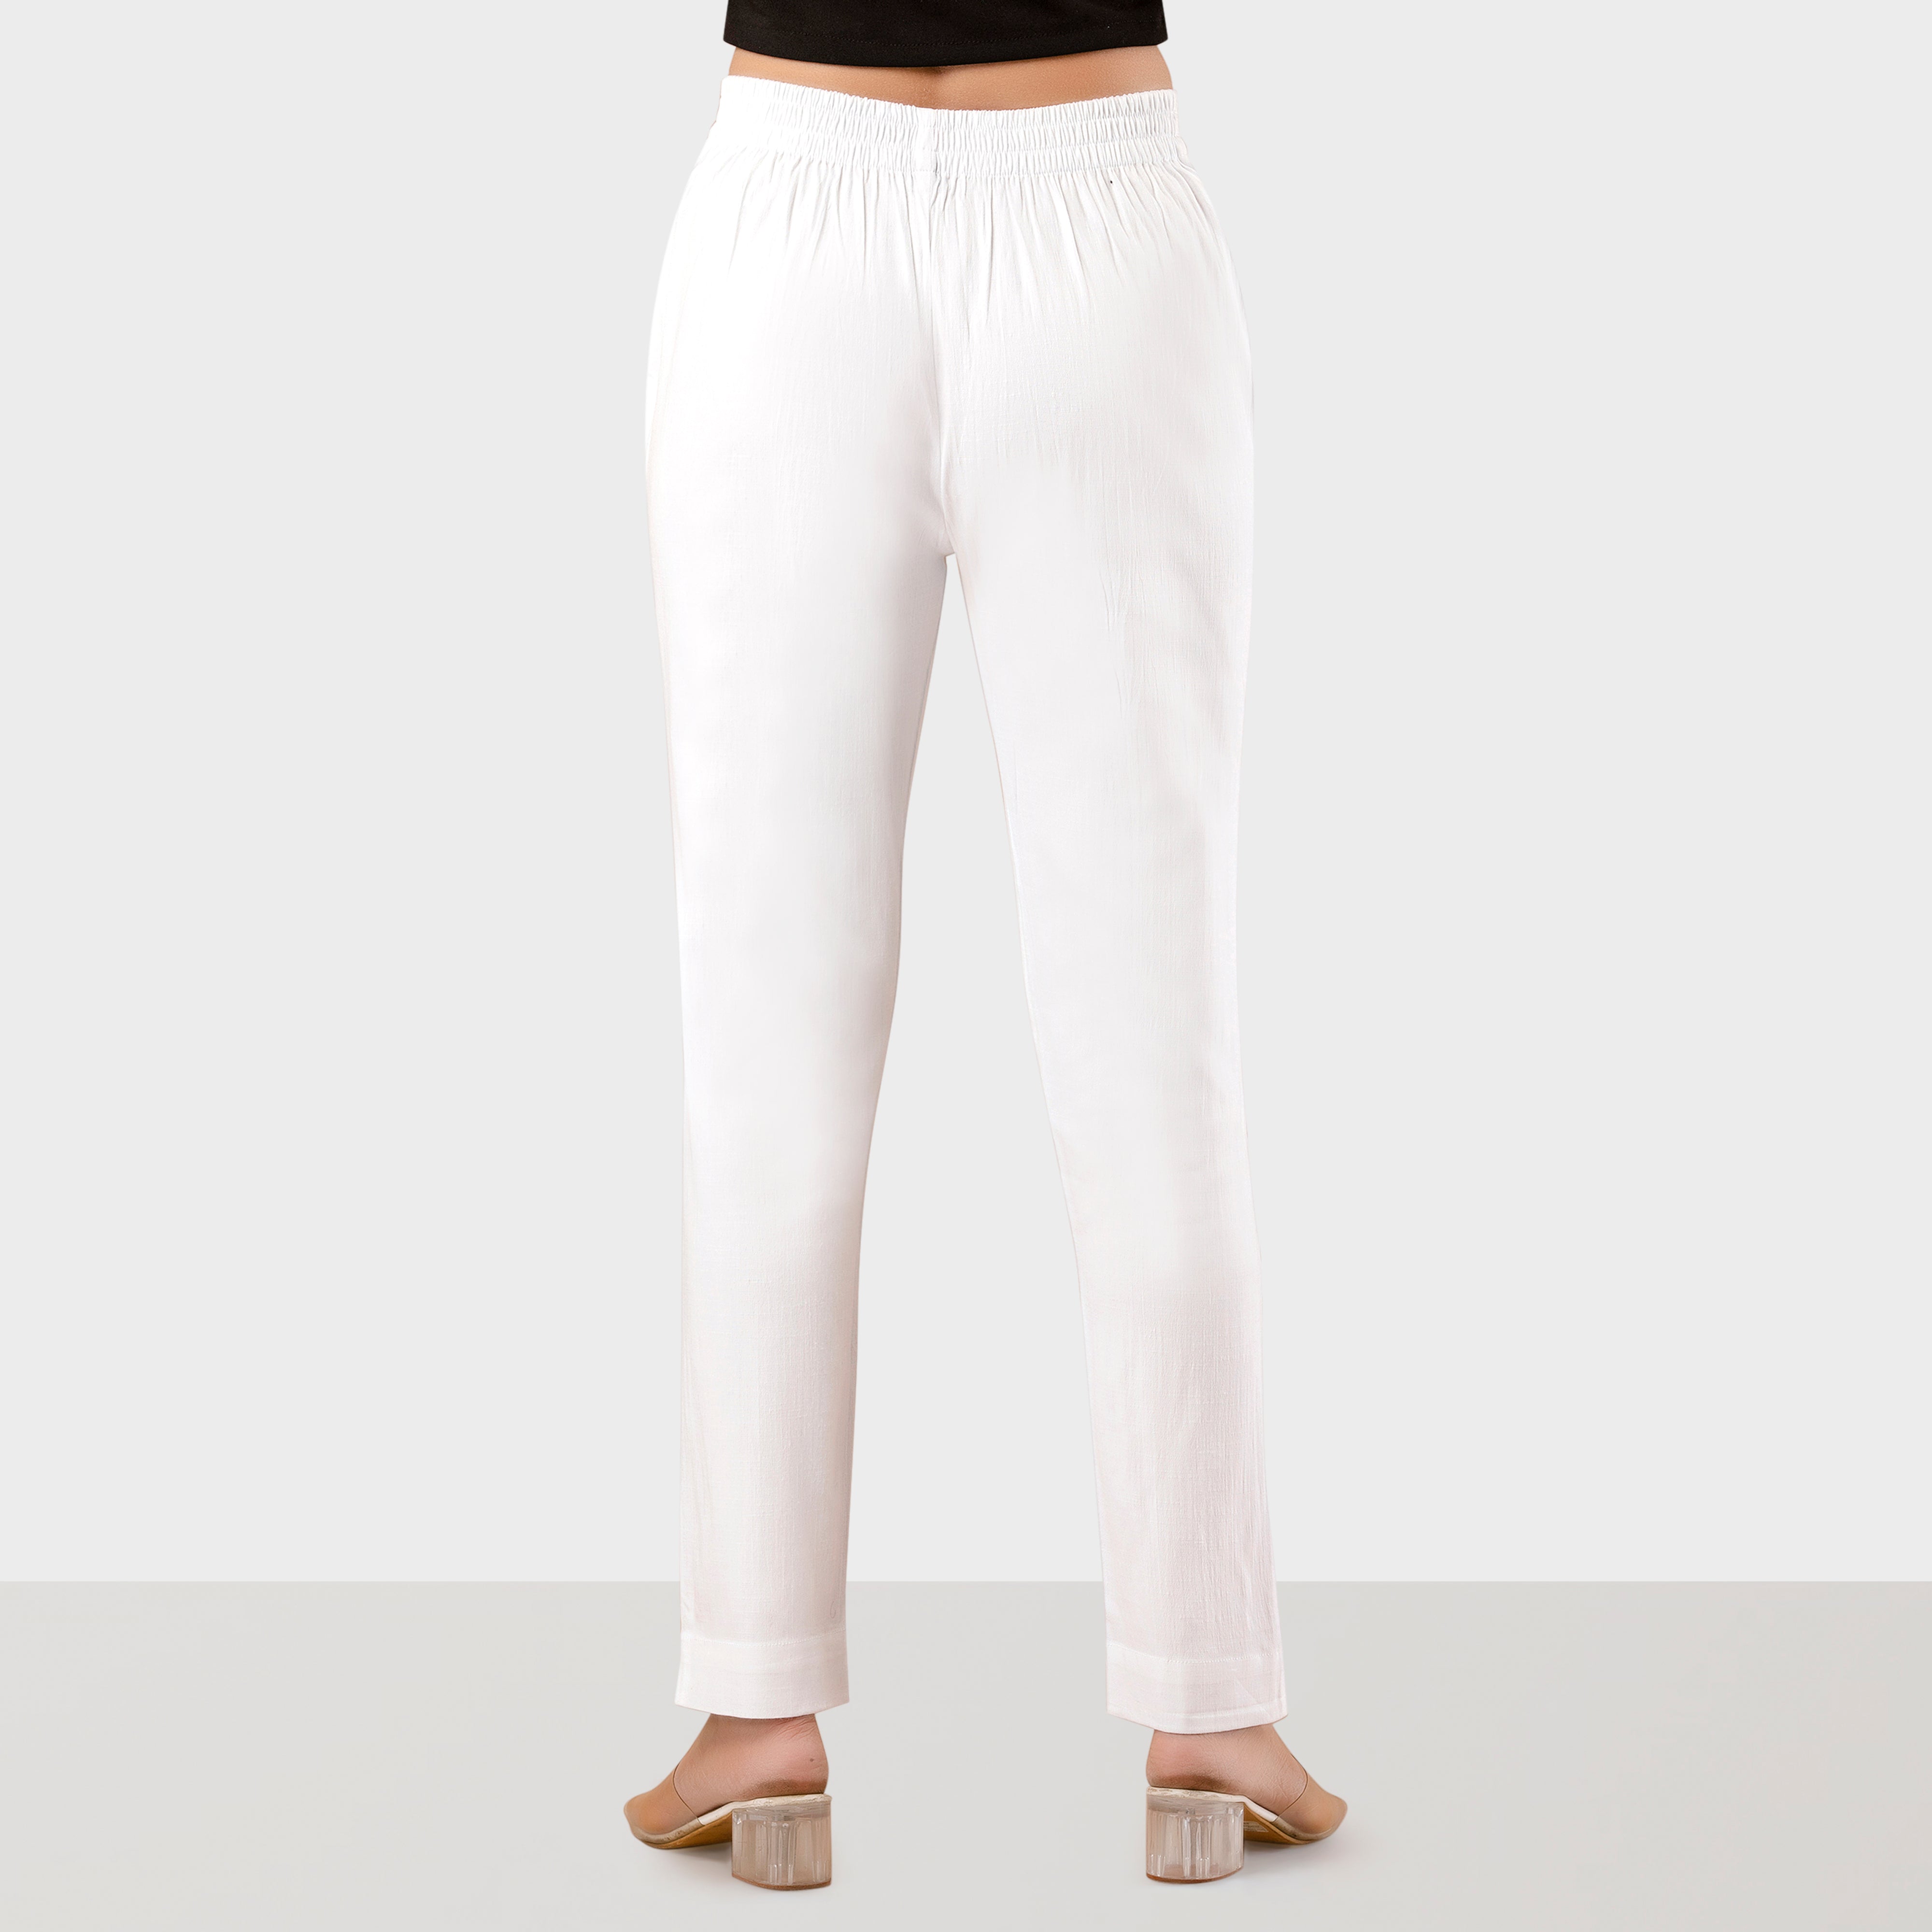 Ladies Stretch Pants - White